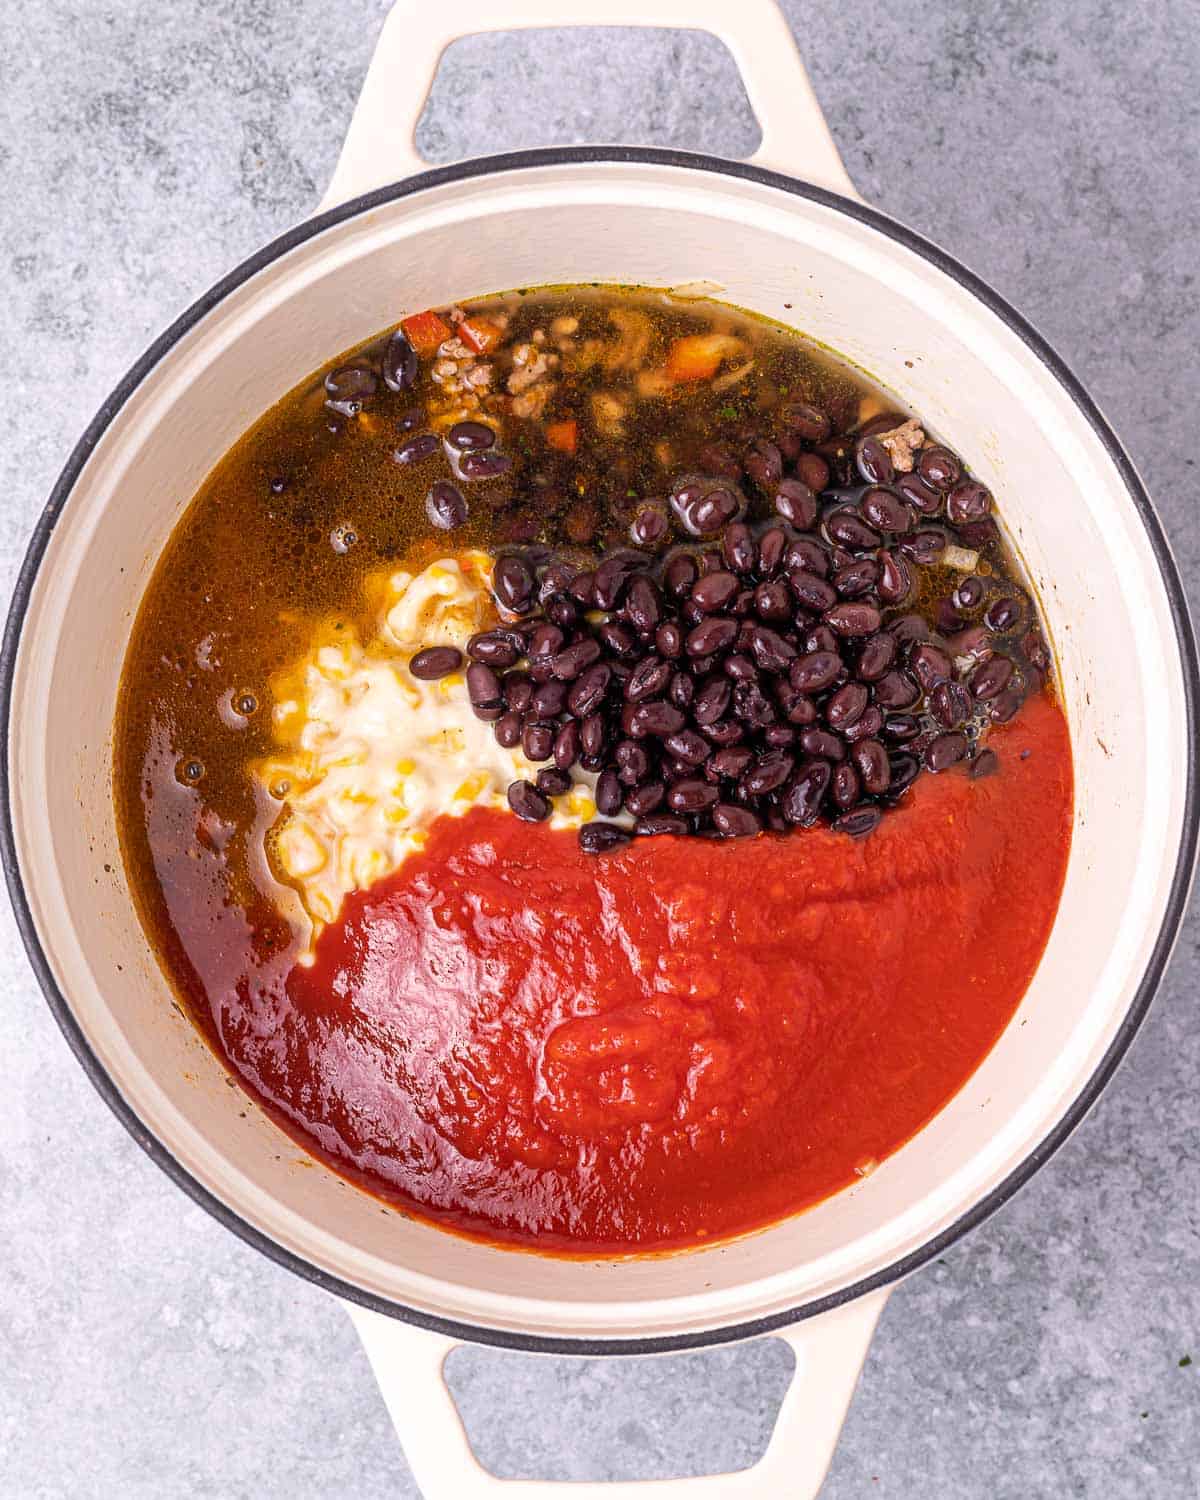 Adding enchilada sauce and black beans to soup pot.